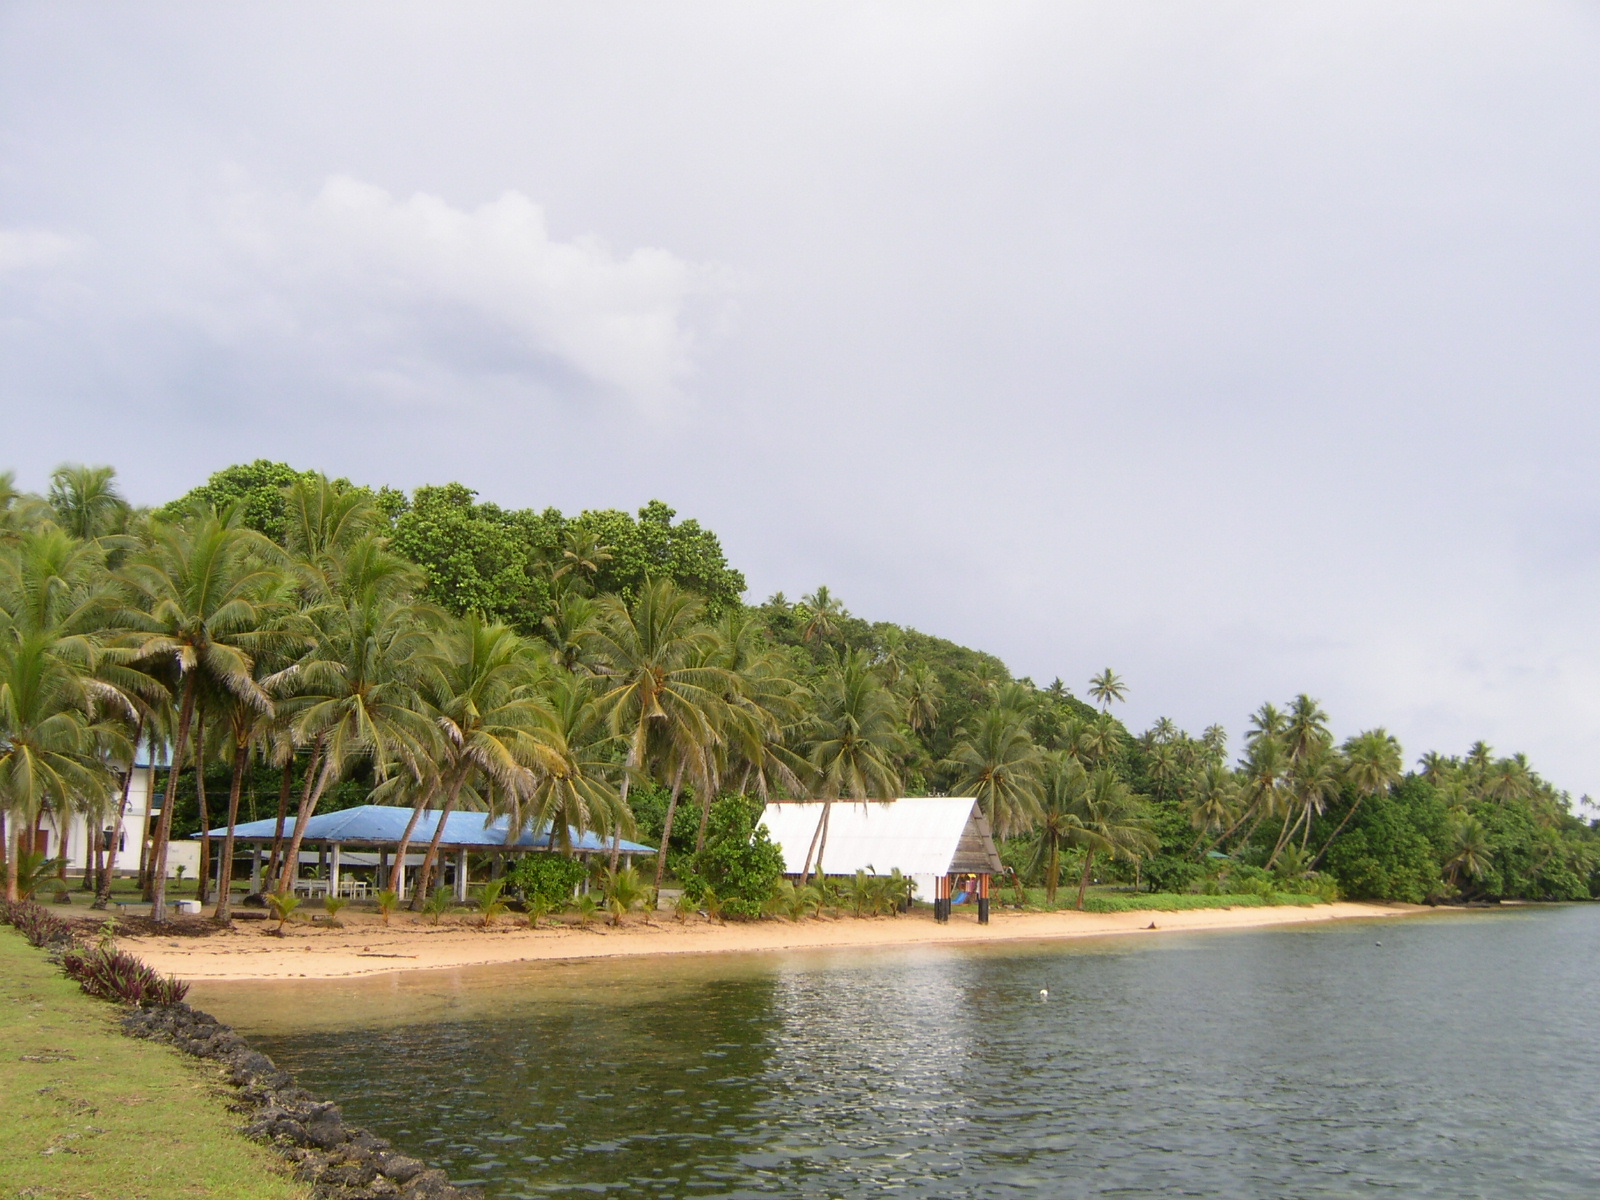 Foto de Palau East Beach ubicado en área natural